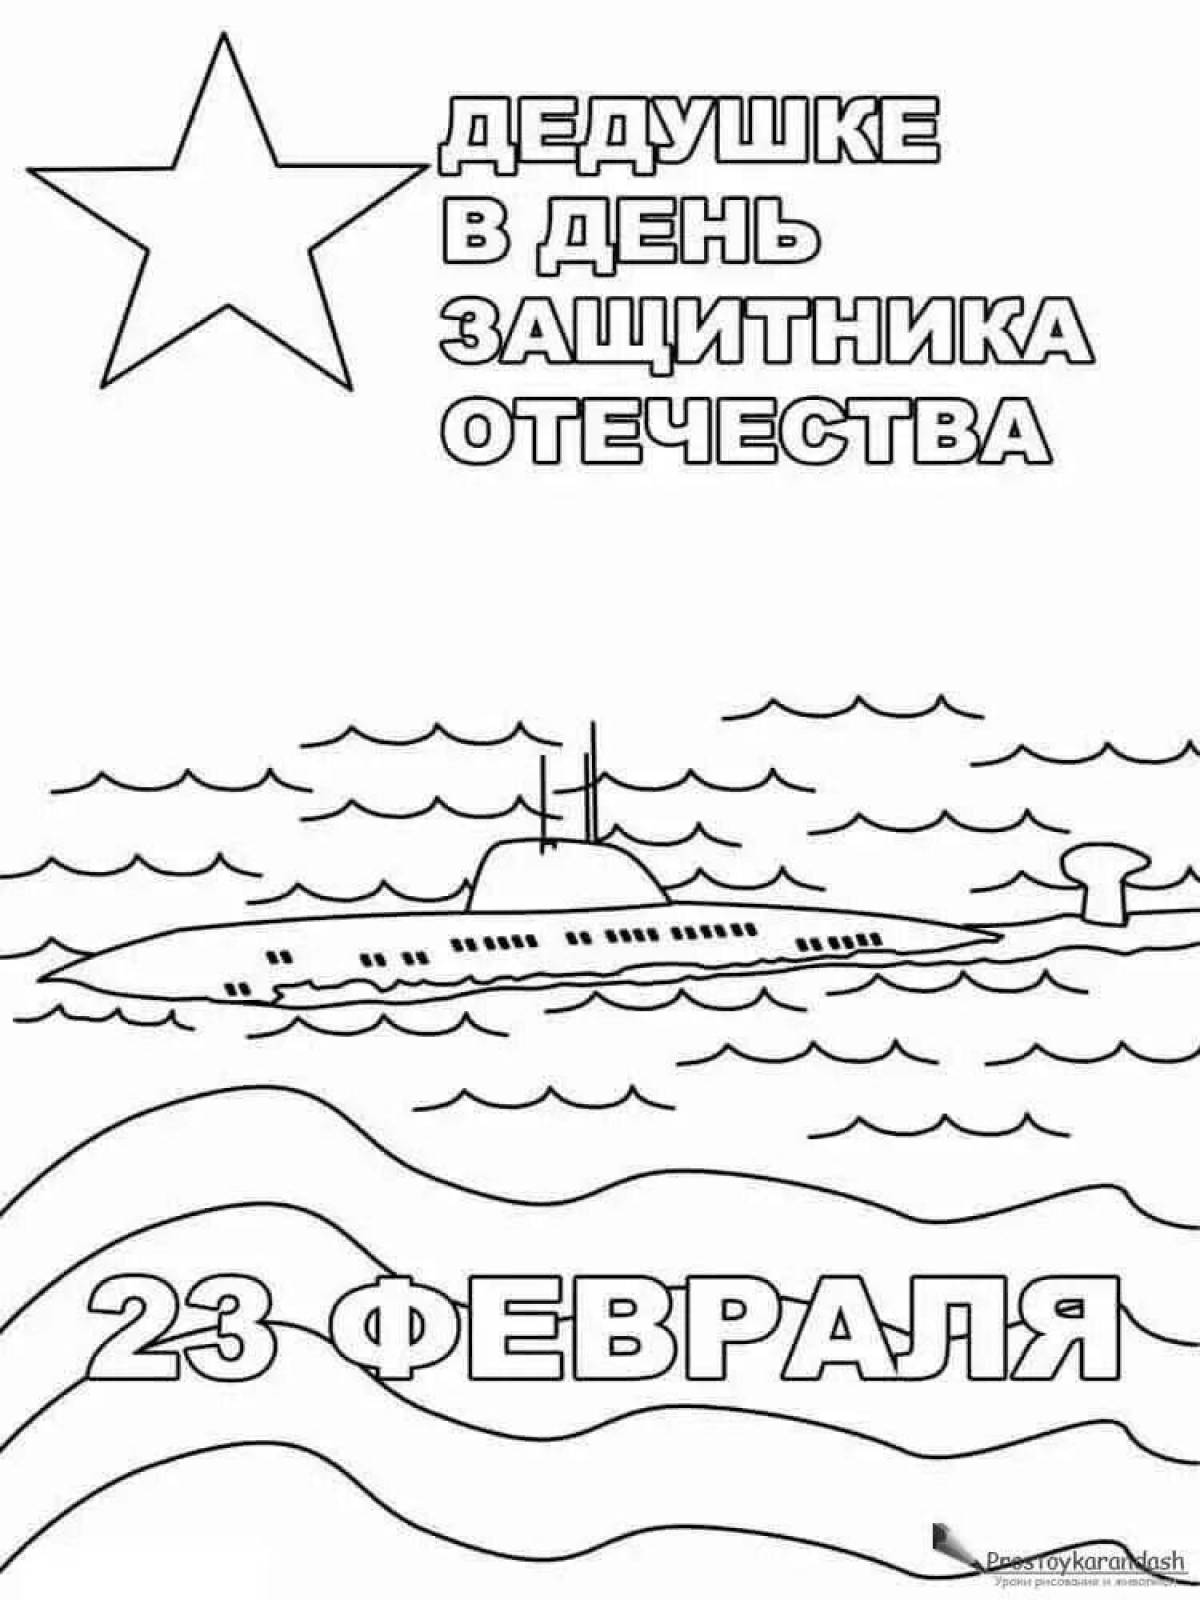 Праздничная открытка ко дню защитника отечества